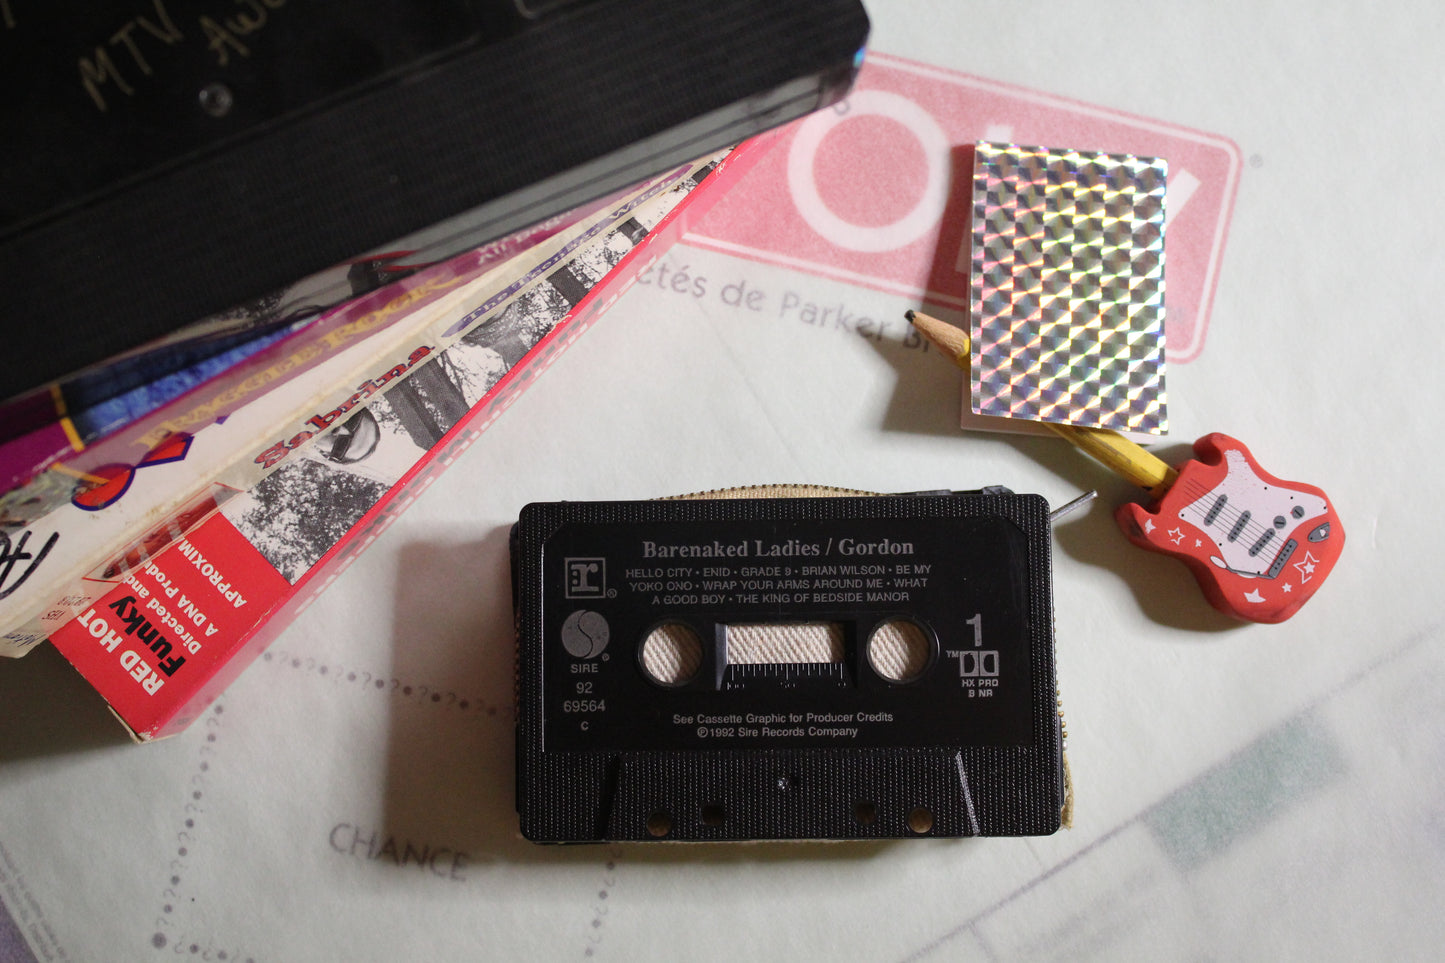 Cassette Wallet - Barenaked Ladies